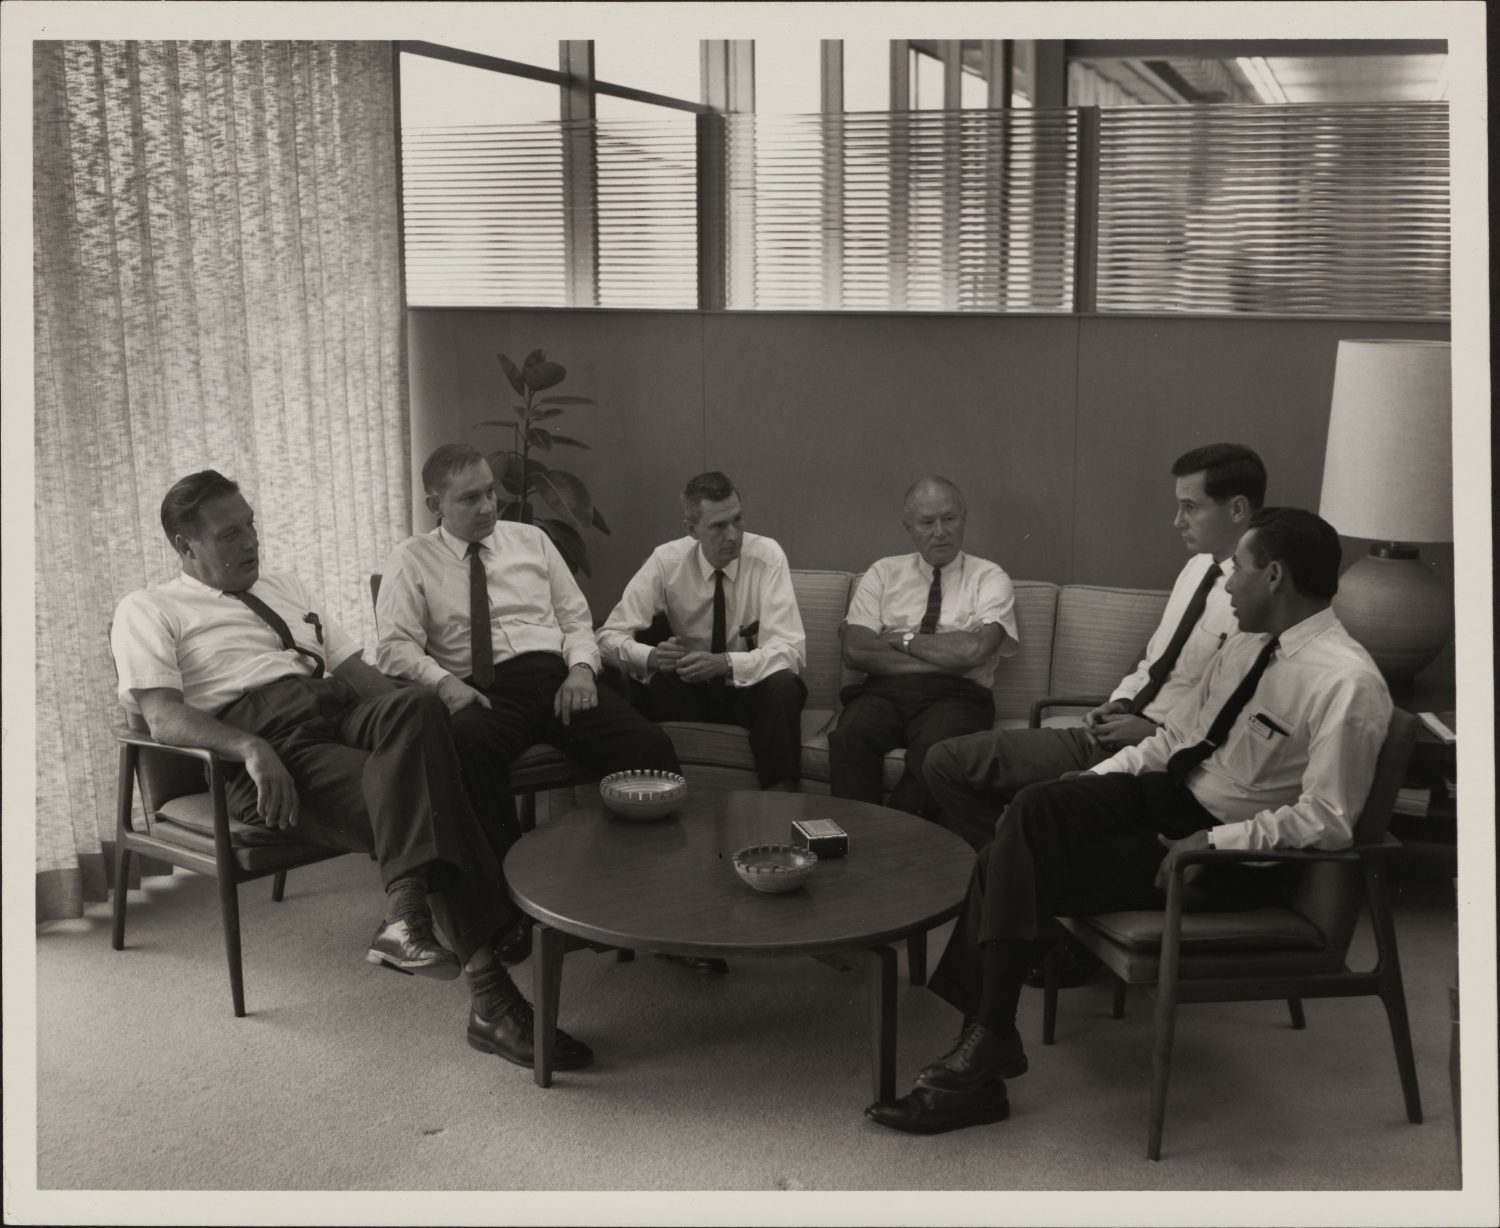 From Left to Right: Barney Oliver, Don Hammond, Paul Stoft, John Cage, Tom Perkins and John Atalla.